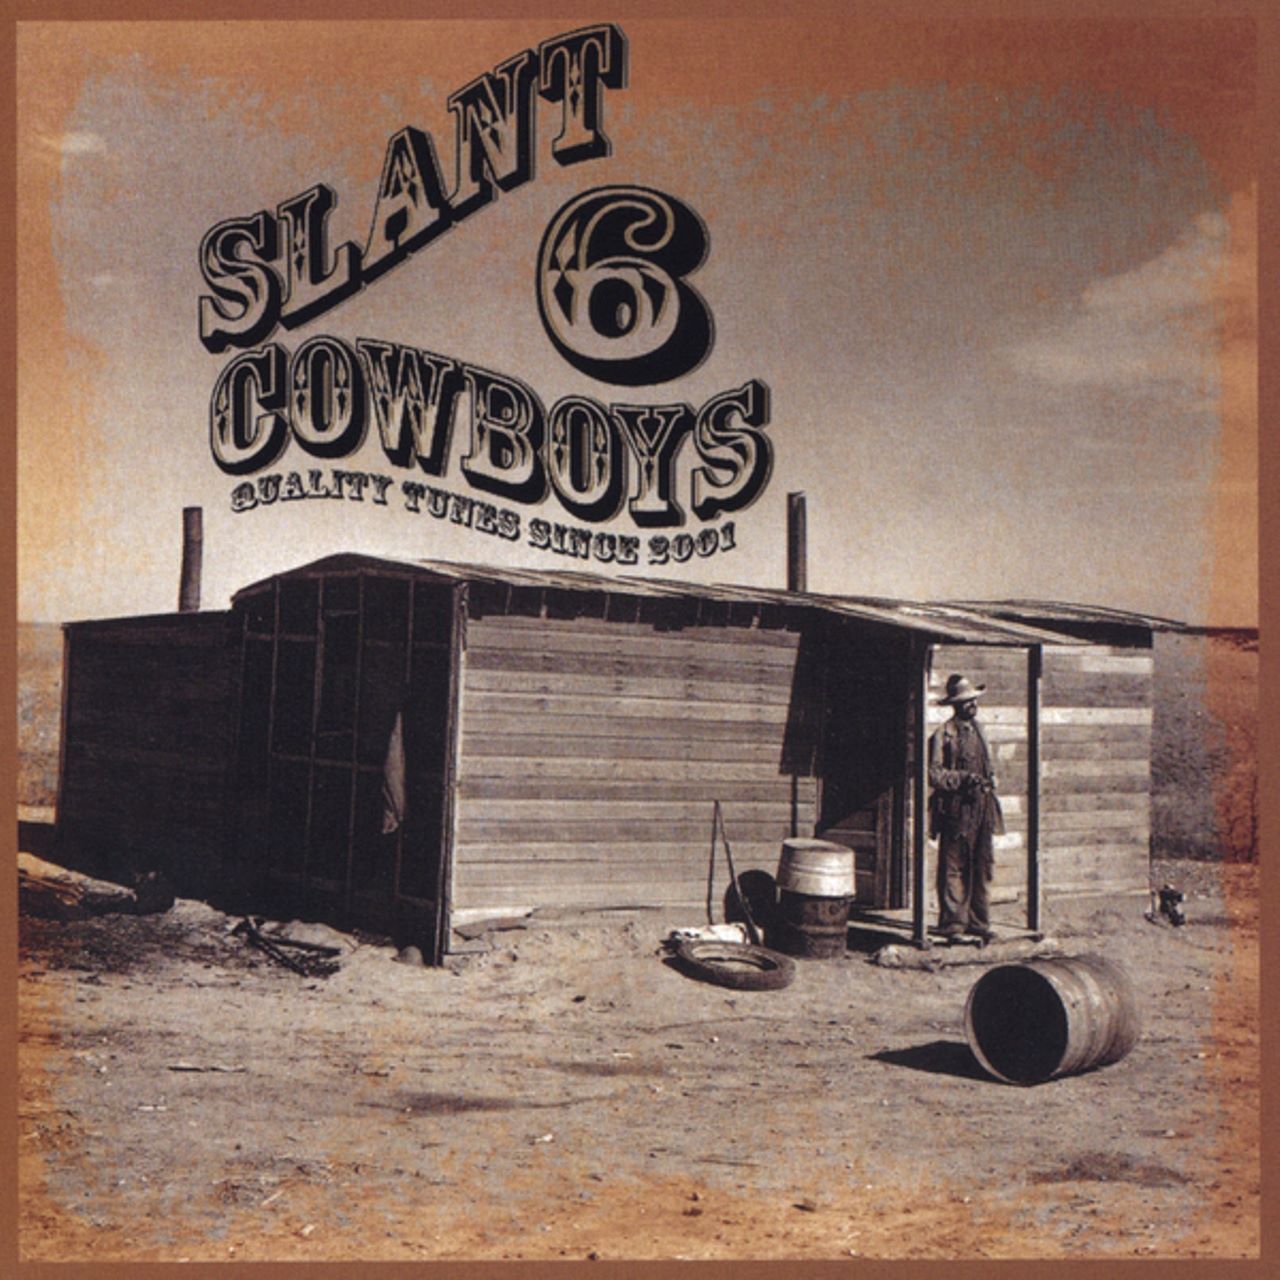 Slant 6 Cowboys - Slant 6 Cowboys cover album